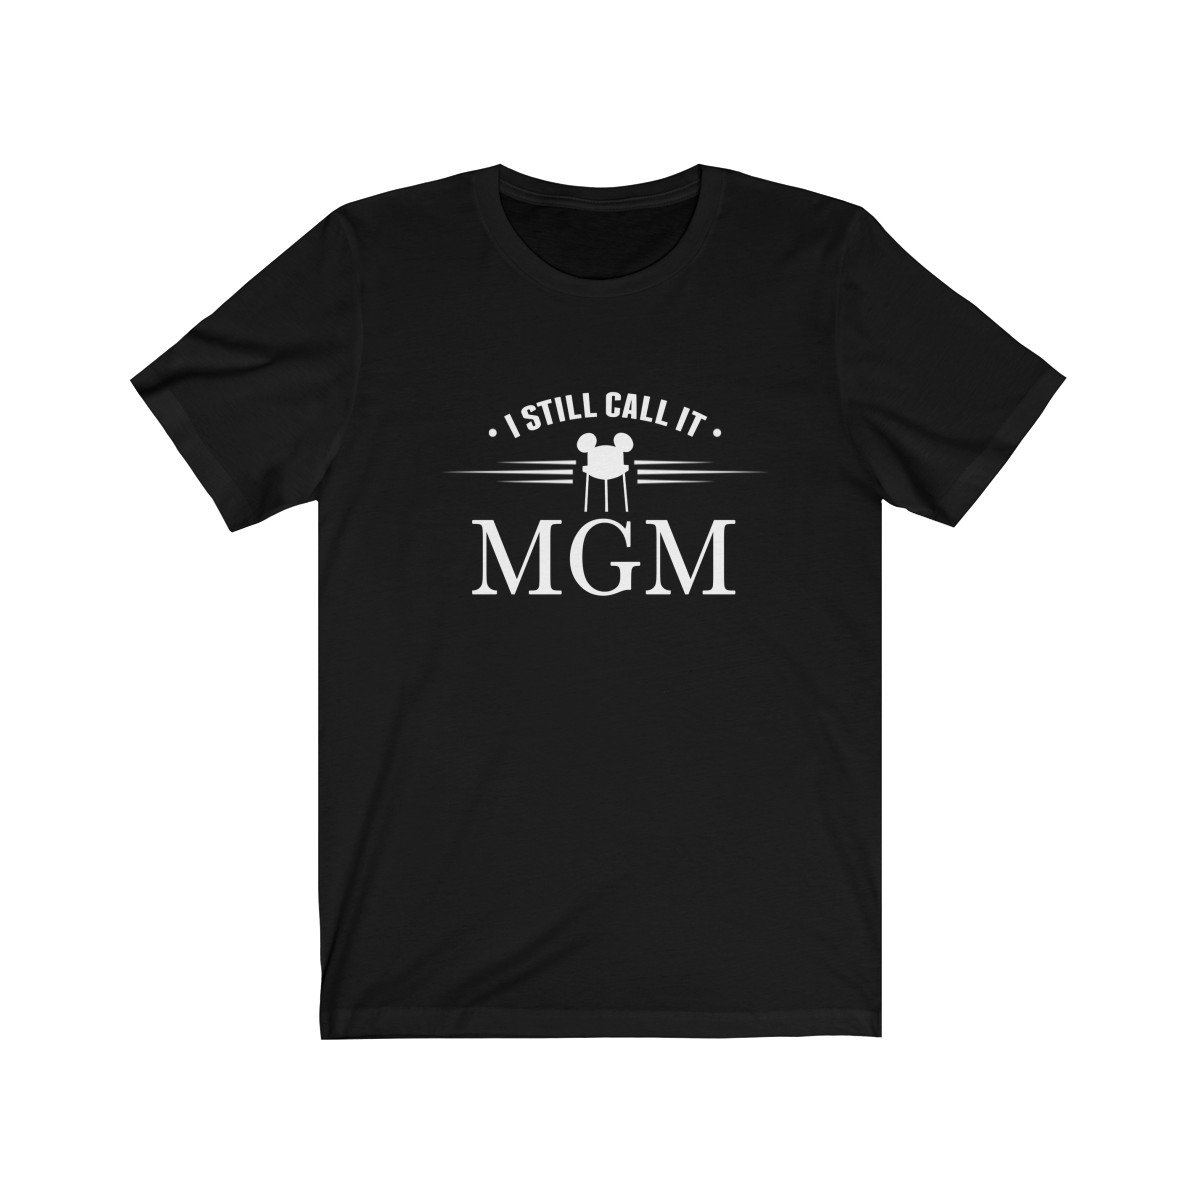 hollywood studios shirt i still call it mgm funny disney shirts mgm shirt disney shirts for men mens disney shirt unisex adult s 3x 9473